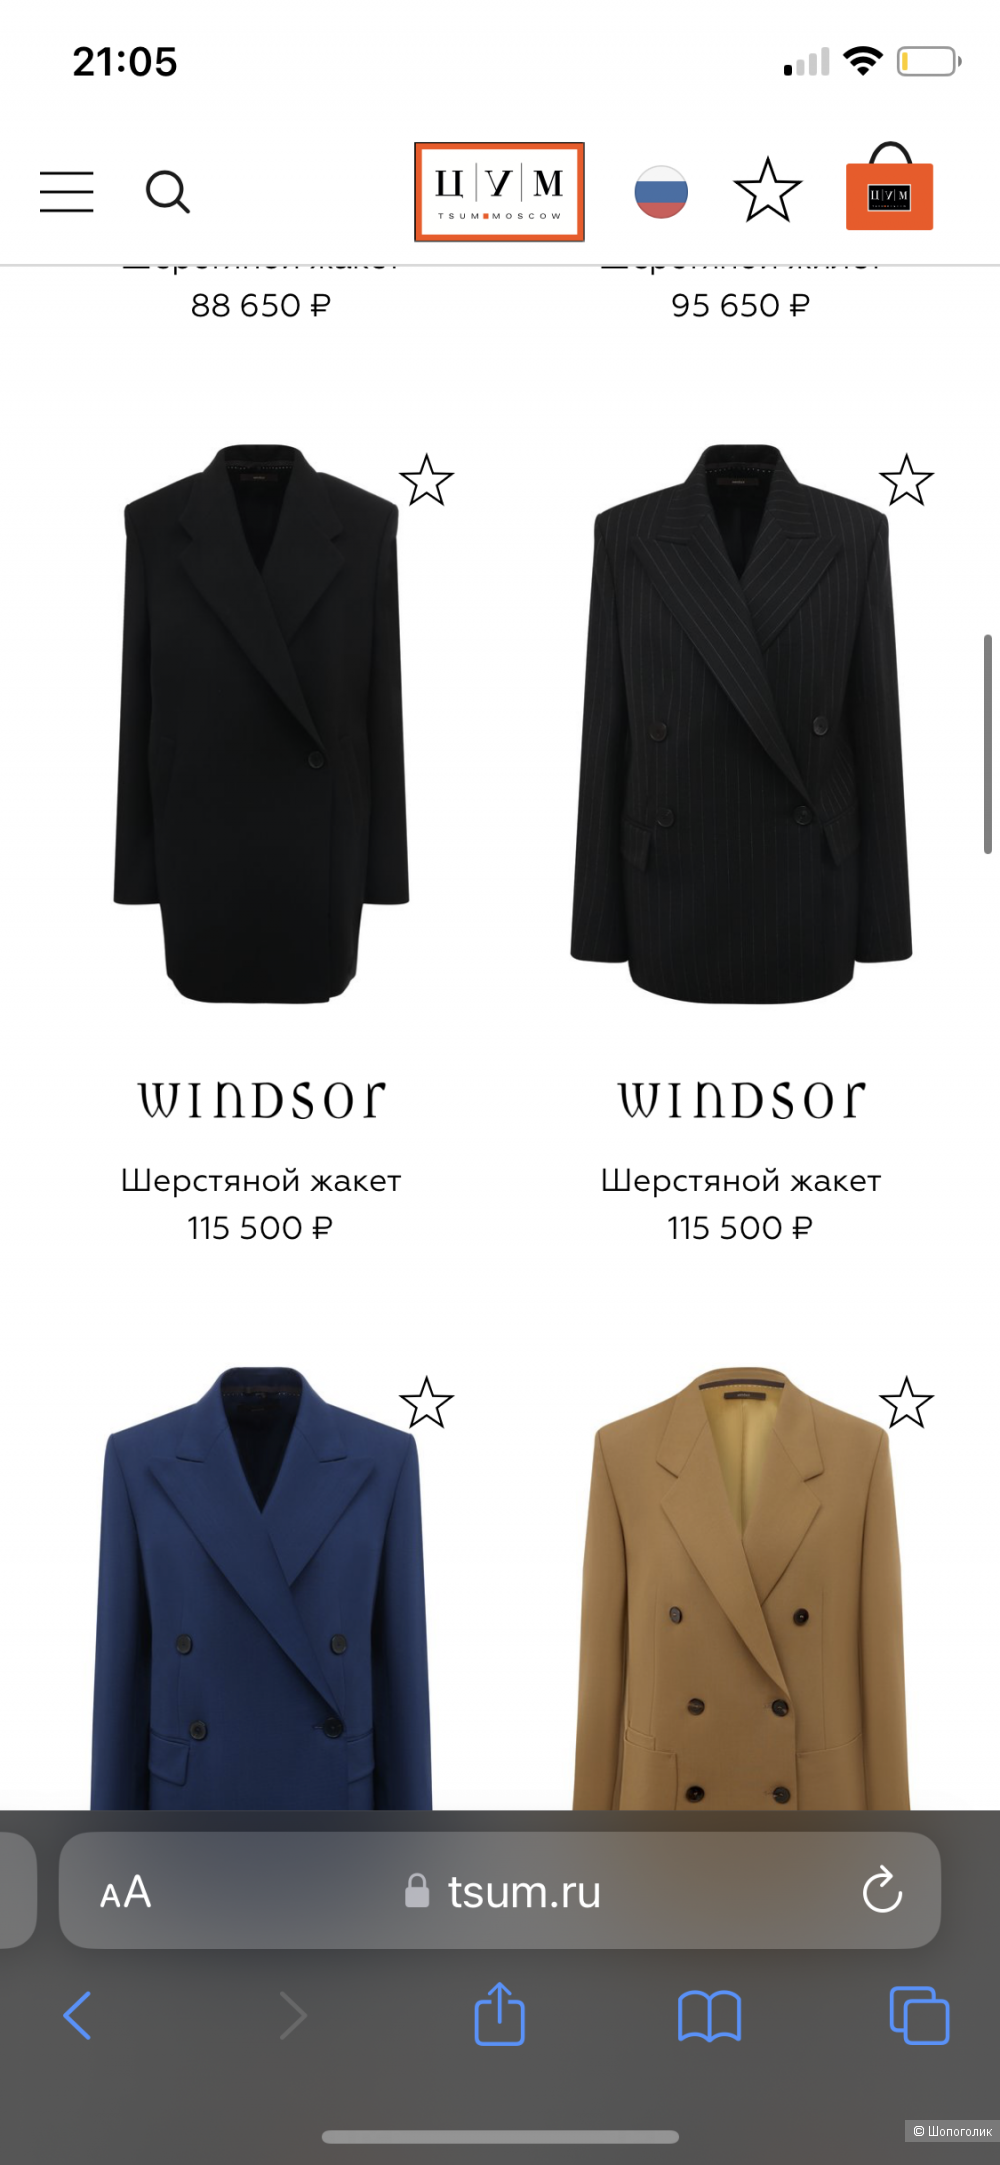 Пиджак Windsor размер - S,M,L